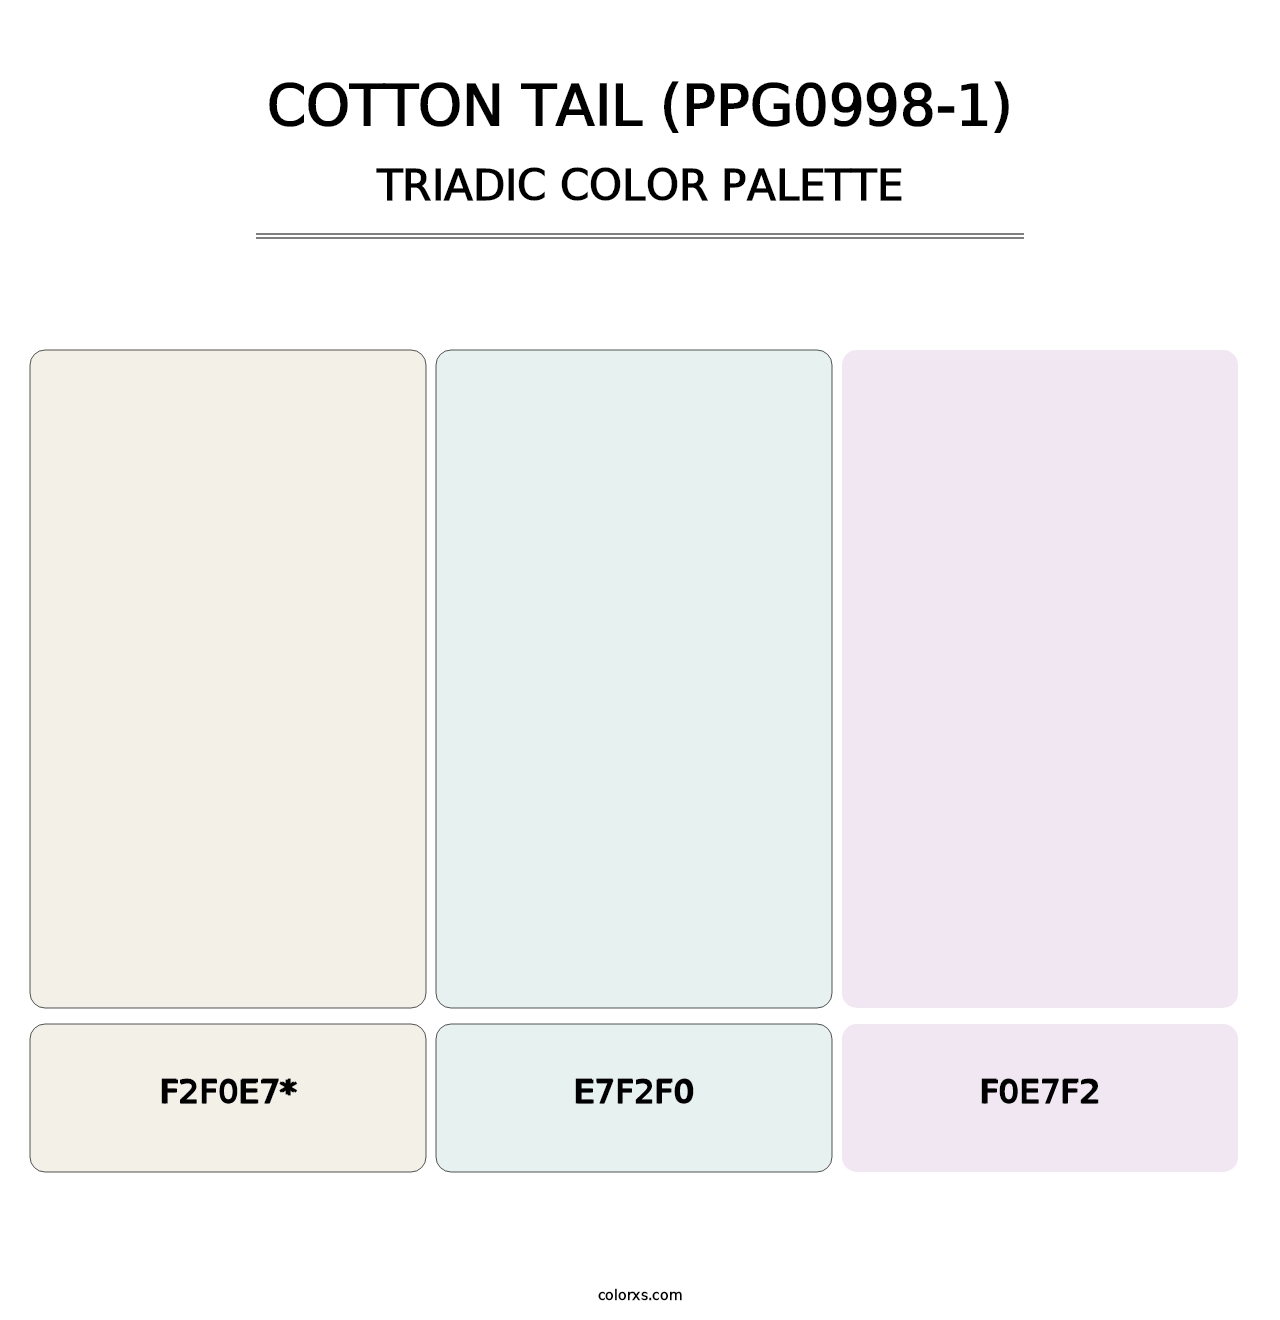 Cotton Tail (PPG0998-1) - Triadic Color Palette